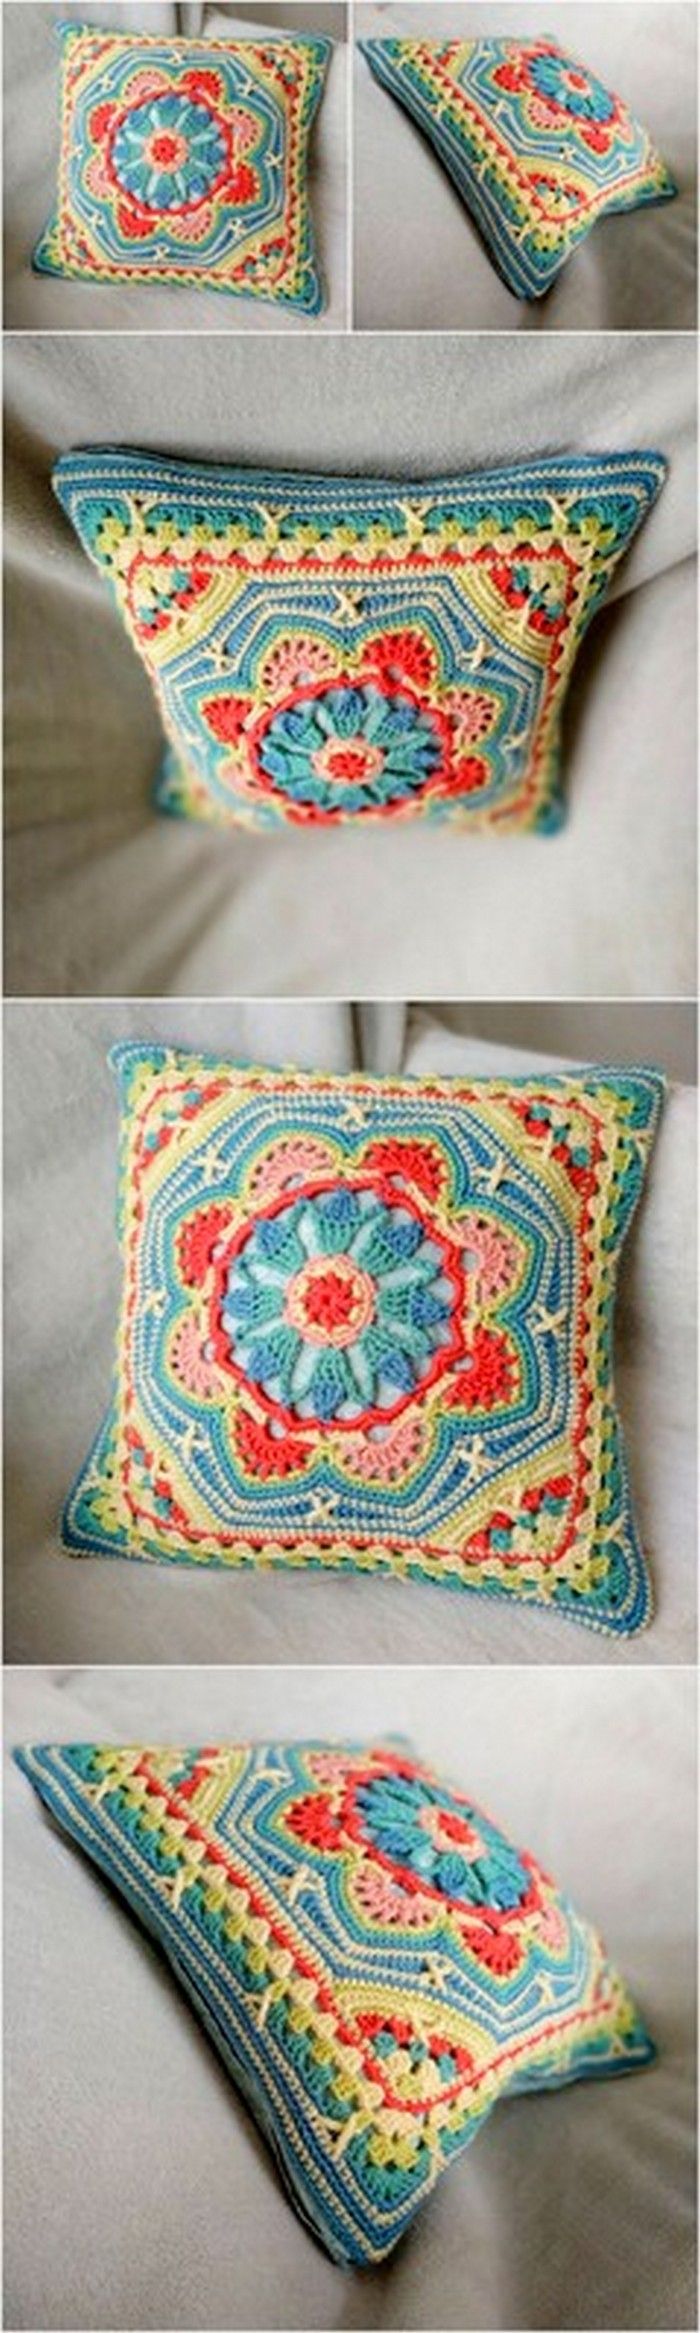 50-Classic-Yet-Simple-DIY-Crochet-Ideas-For-You.jpg